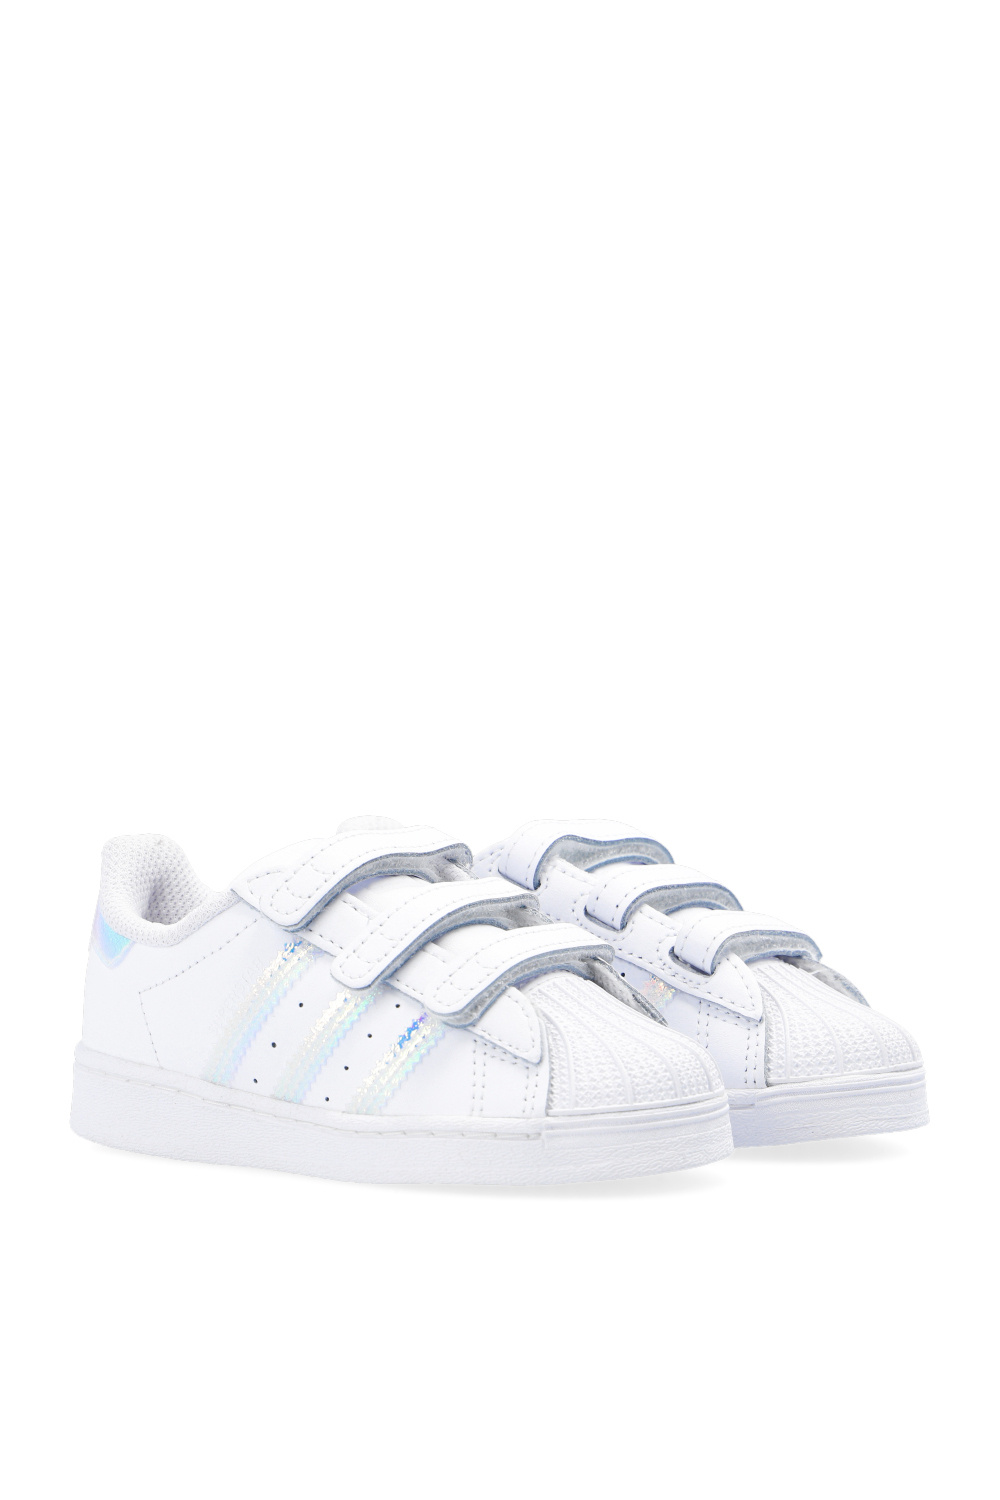 Sjah welzijn plastic IetpShops KR - White 'Superstar CF I' sneakers ADIDAS Kids - all official  adidas xr1 releases shoes